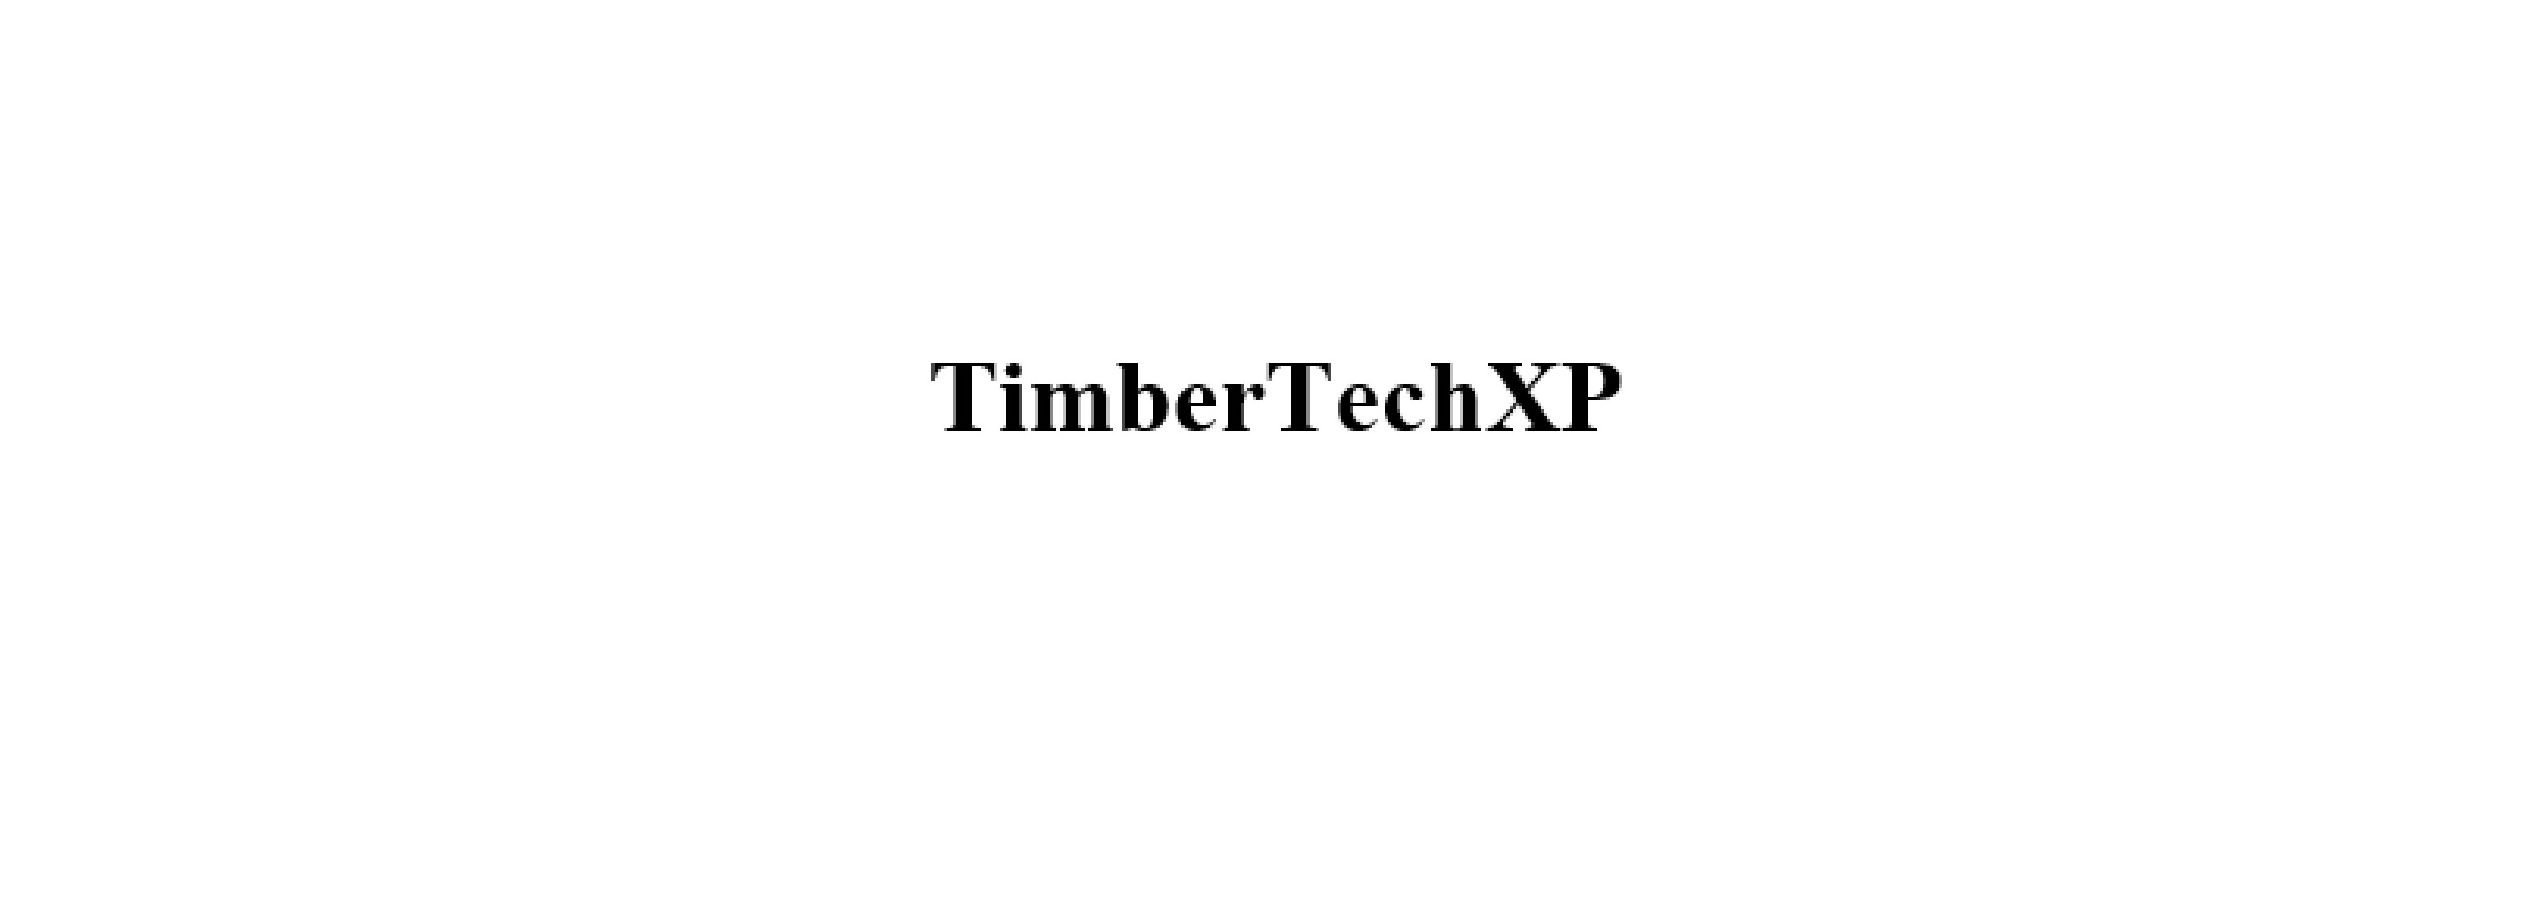  TIMBERTECHXP